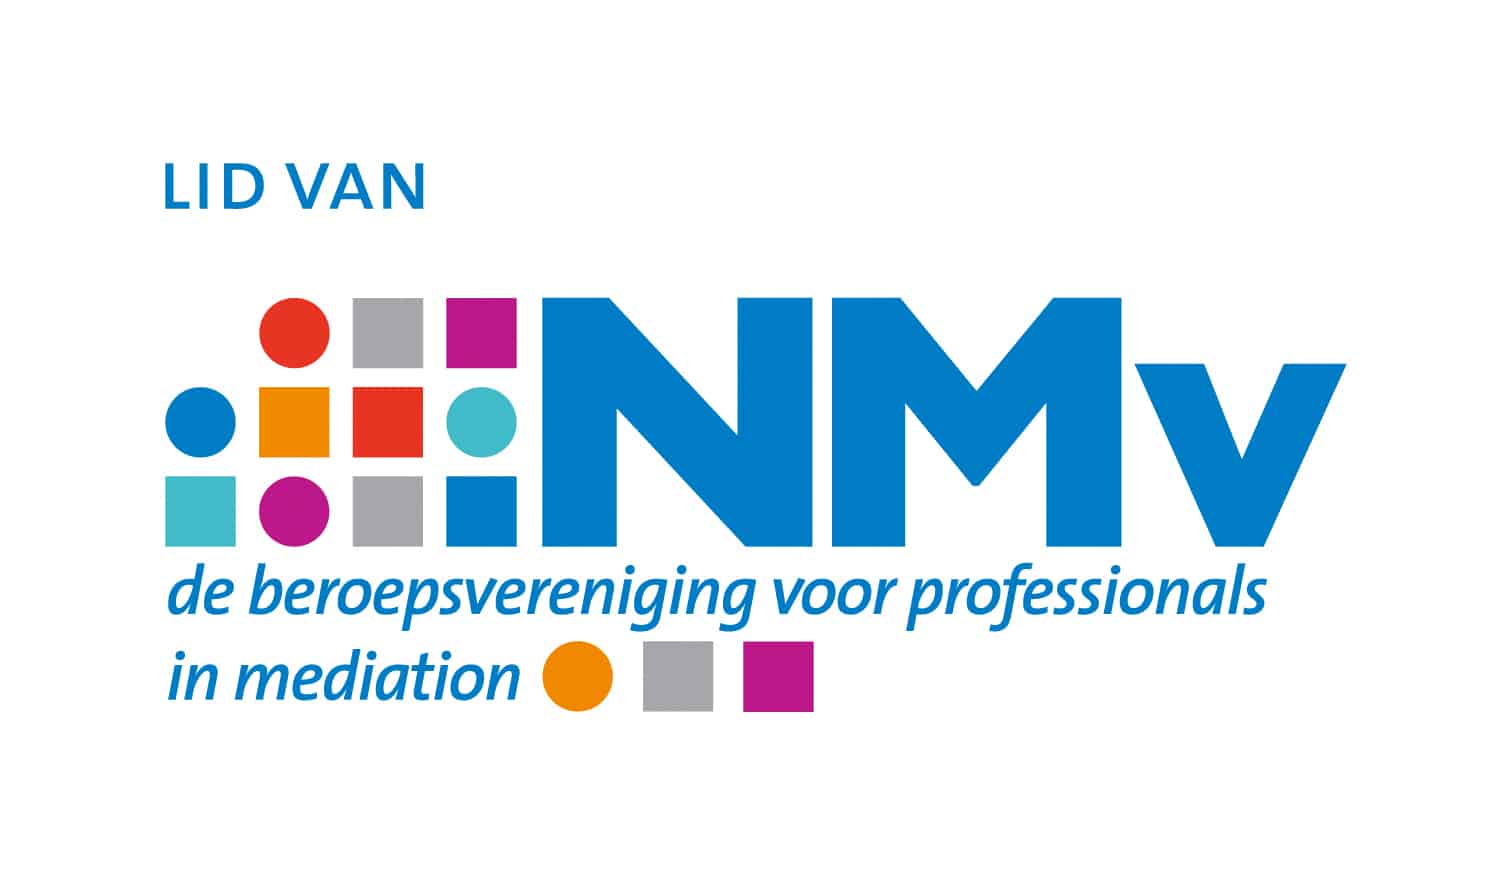 Speaking Terms Mediation is lid van de NMV